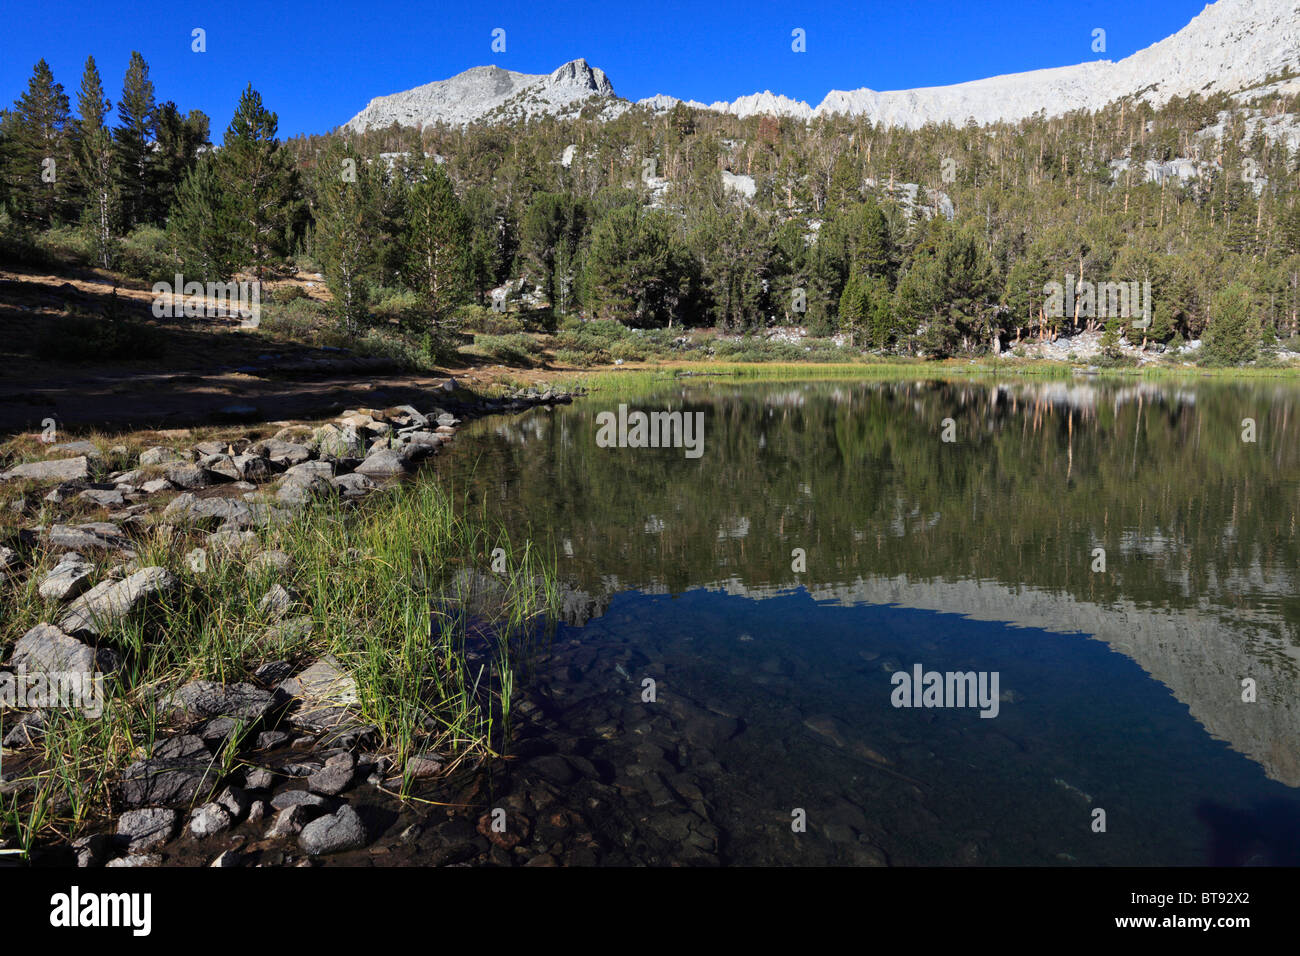 Alpine lake in Sierra Nevada mountains of California Stock Photo